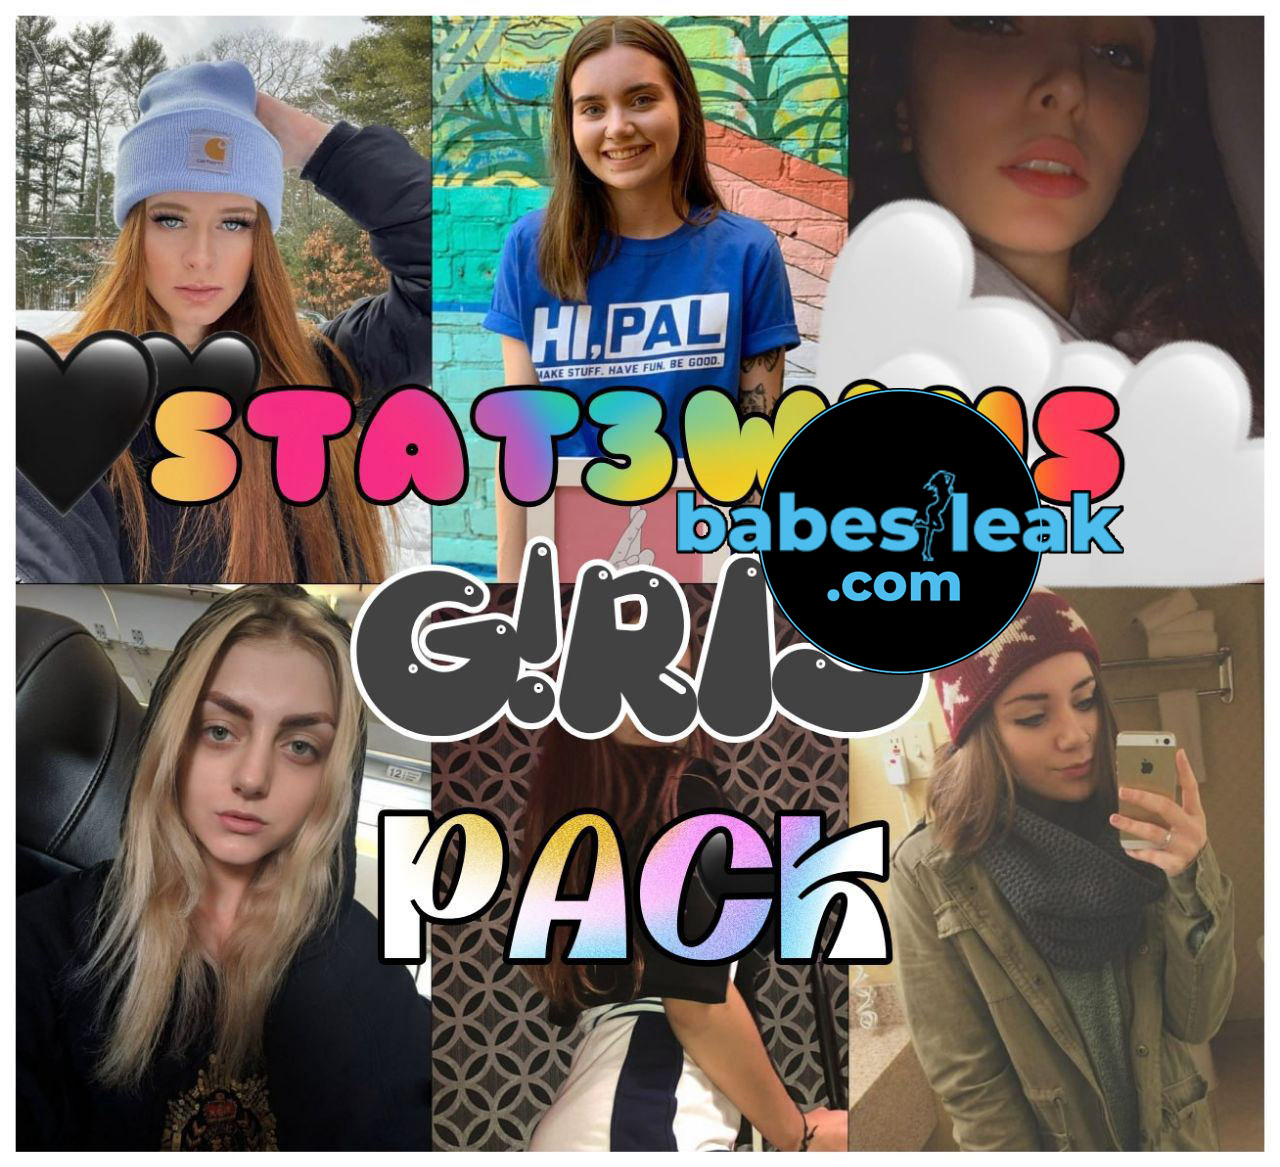 8 Premium Statewins Girls Pack Stw085 Onlyfans Leaks Snapchat Leaks Statewins Leaks Teens 